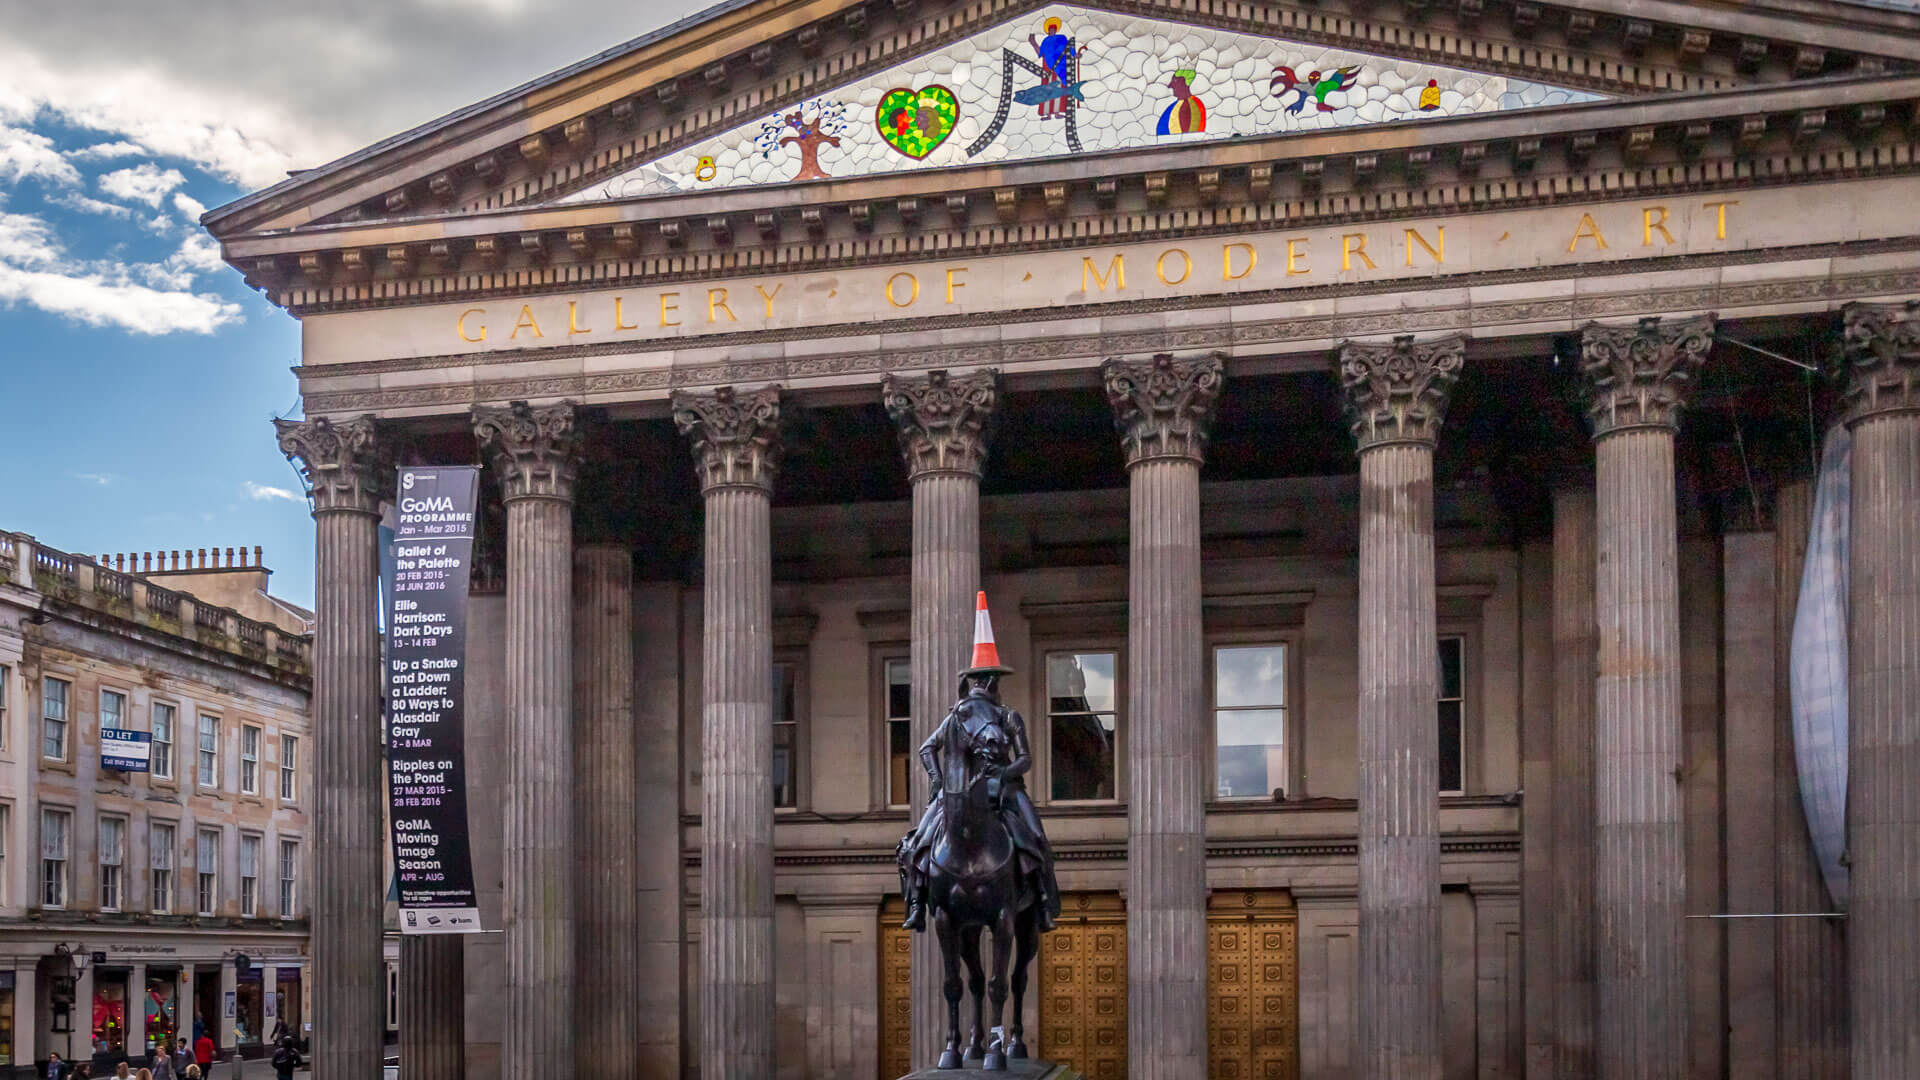 Glasgow Gallery of modern Art